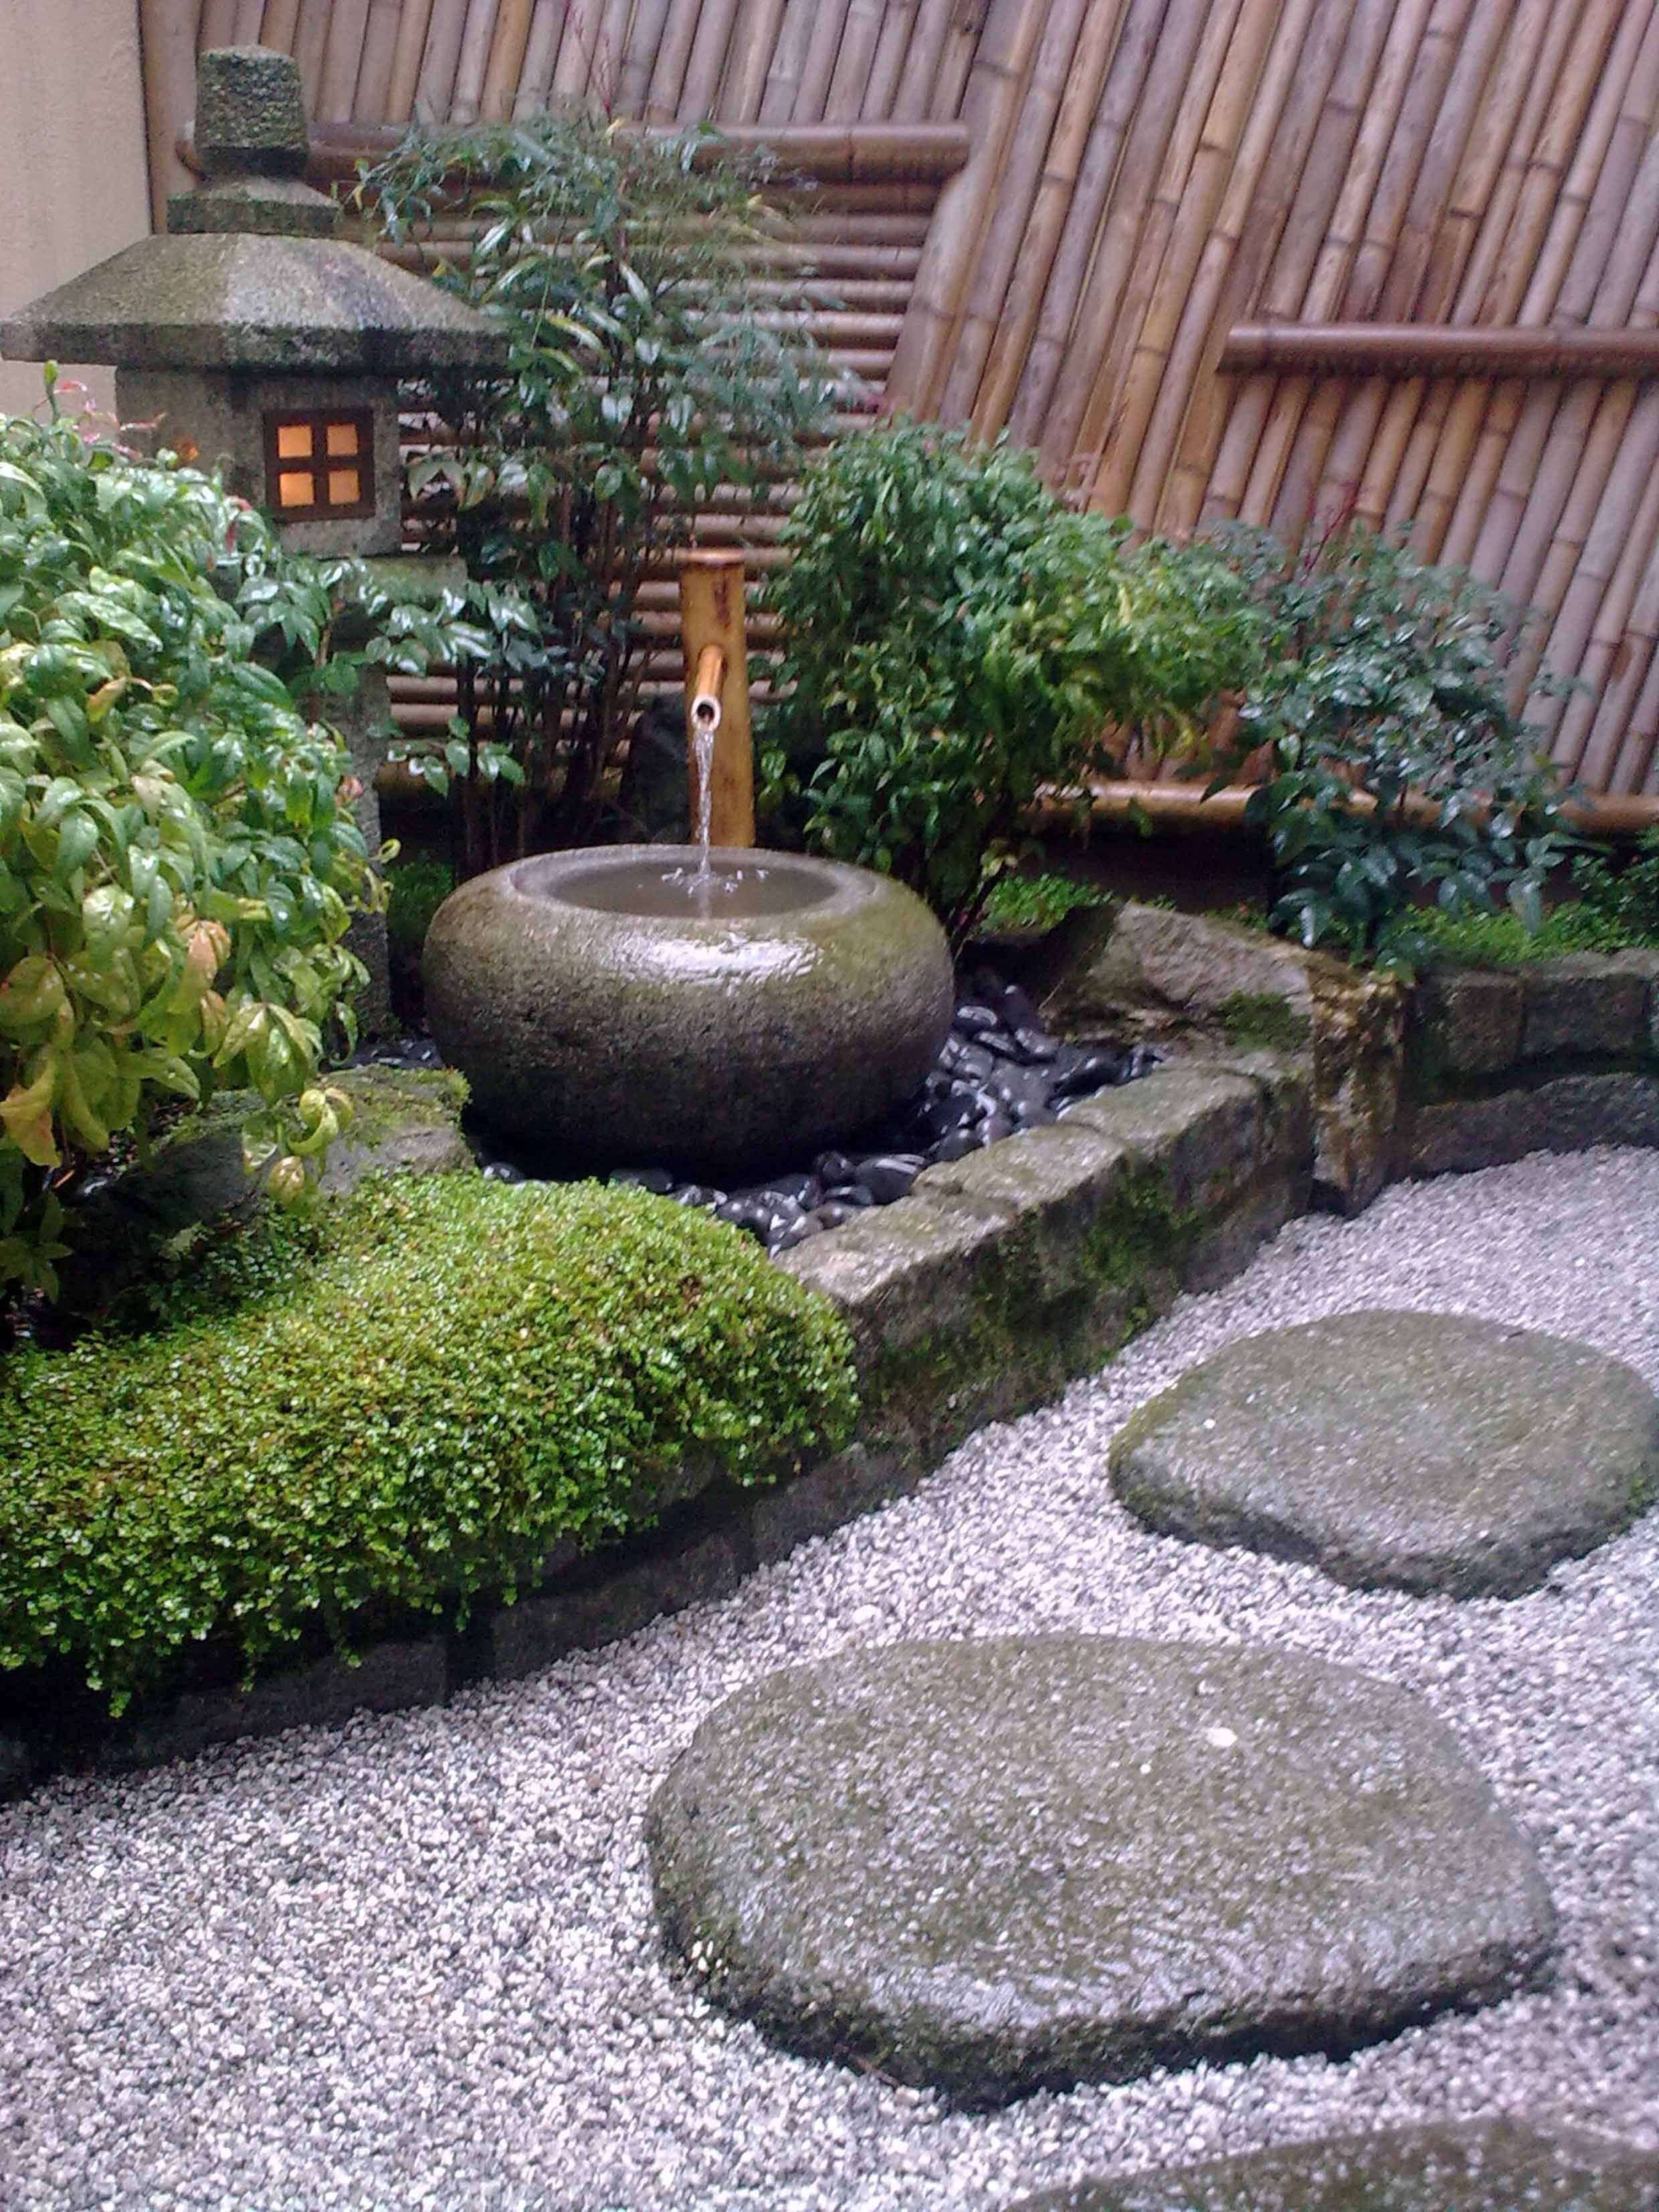 Very Creative And Inspiring Garden Stone Pathway Ideas